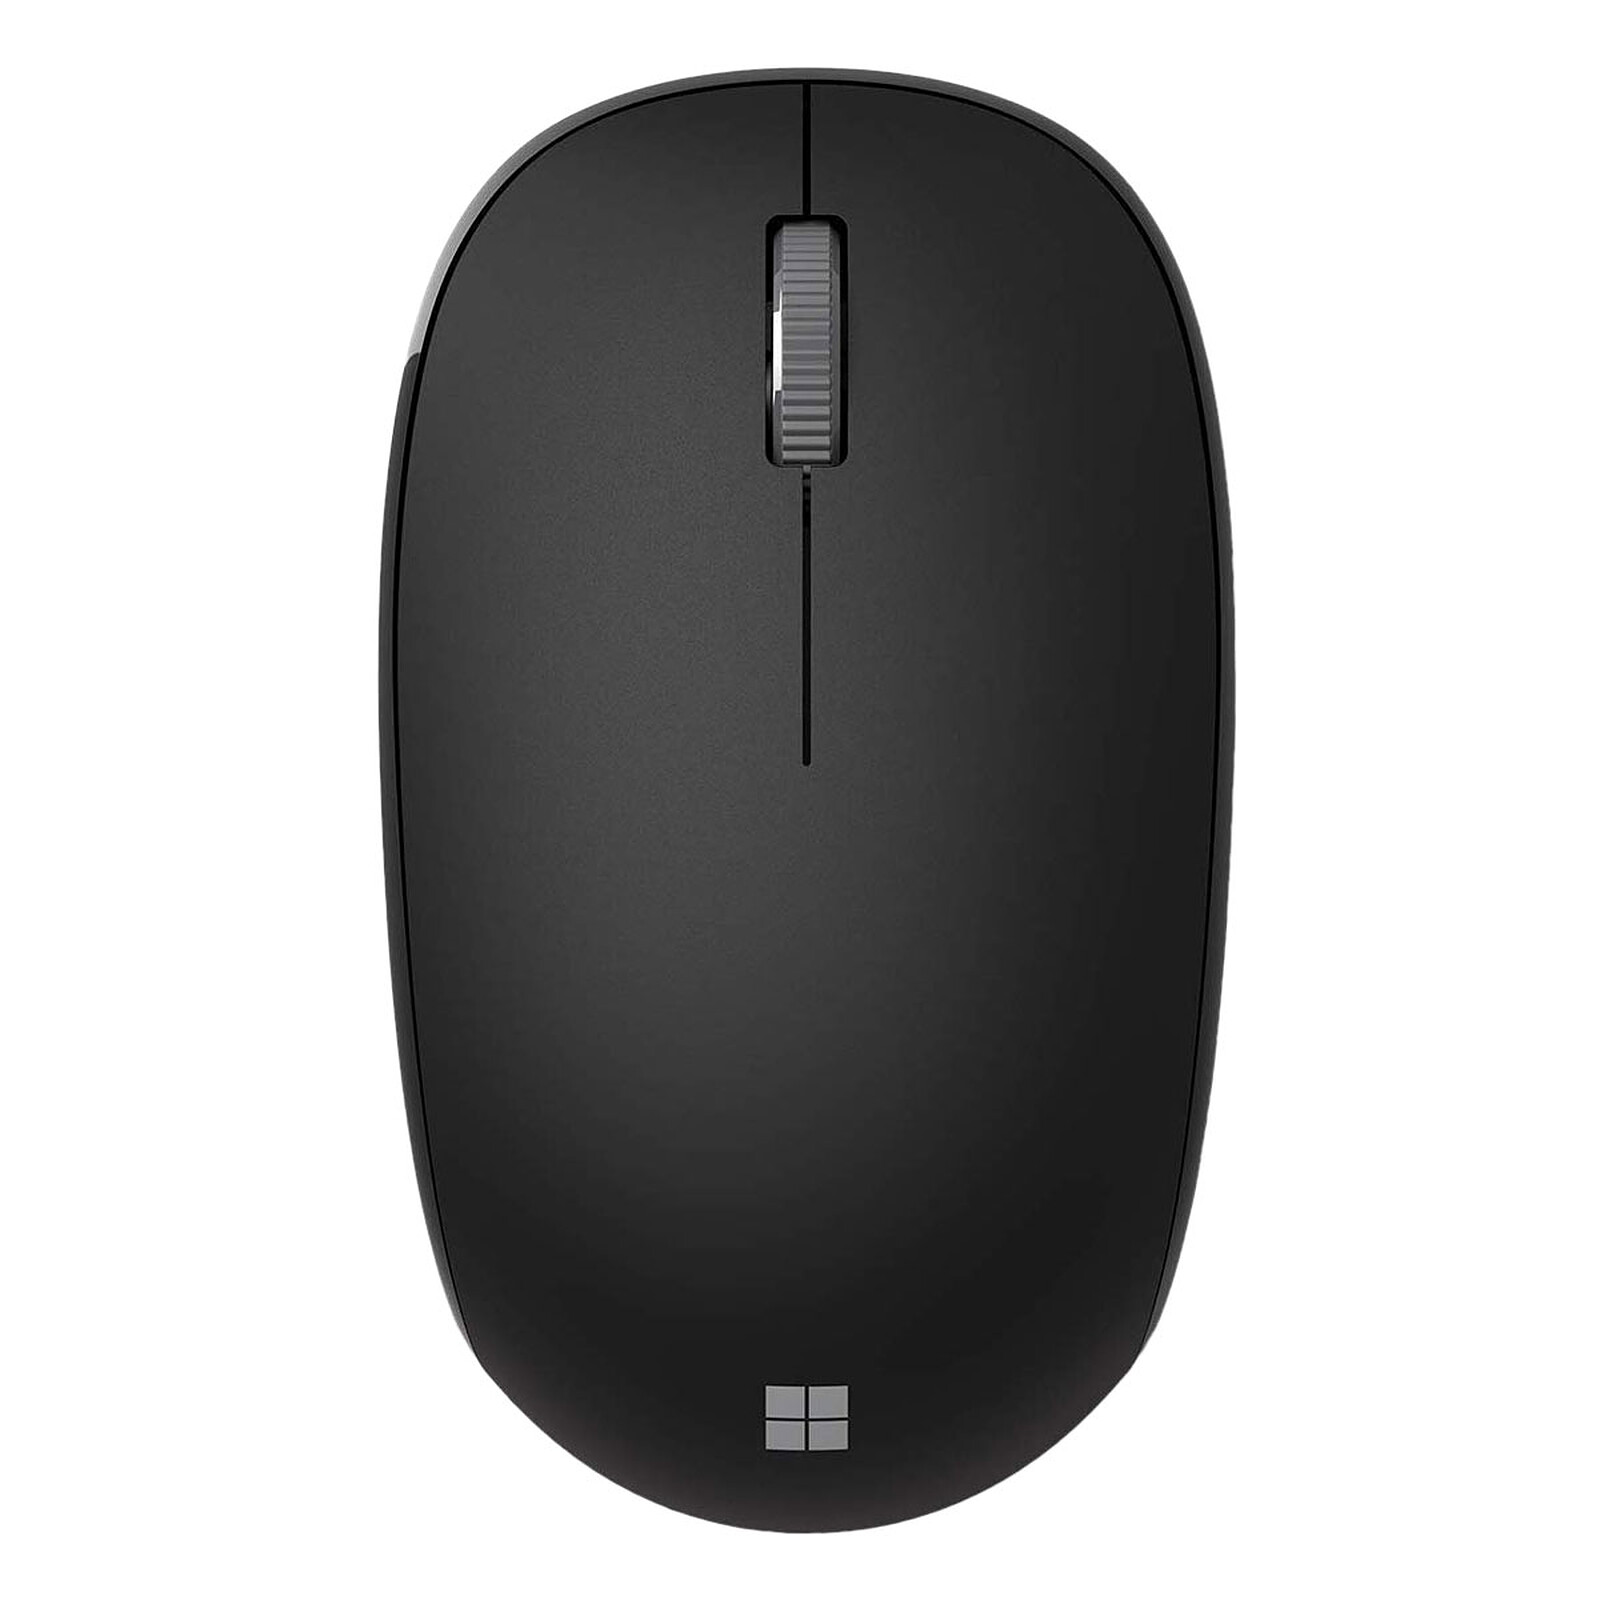 Microsoft Bluetooth Ergonomic Wireless Mouse Review